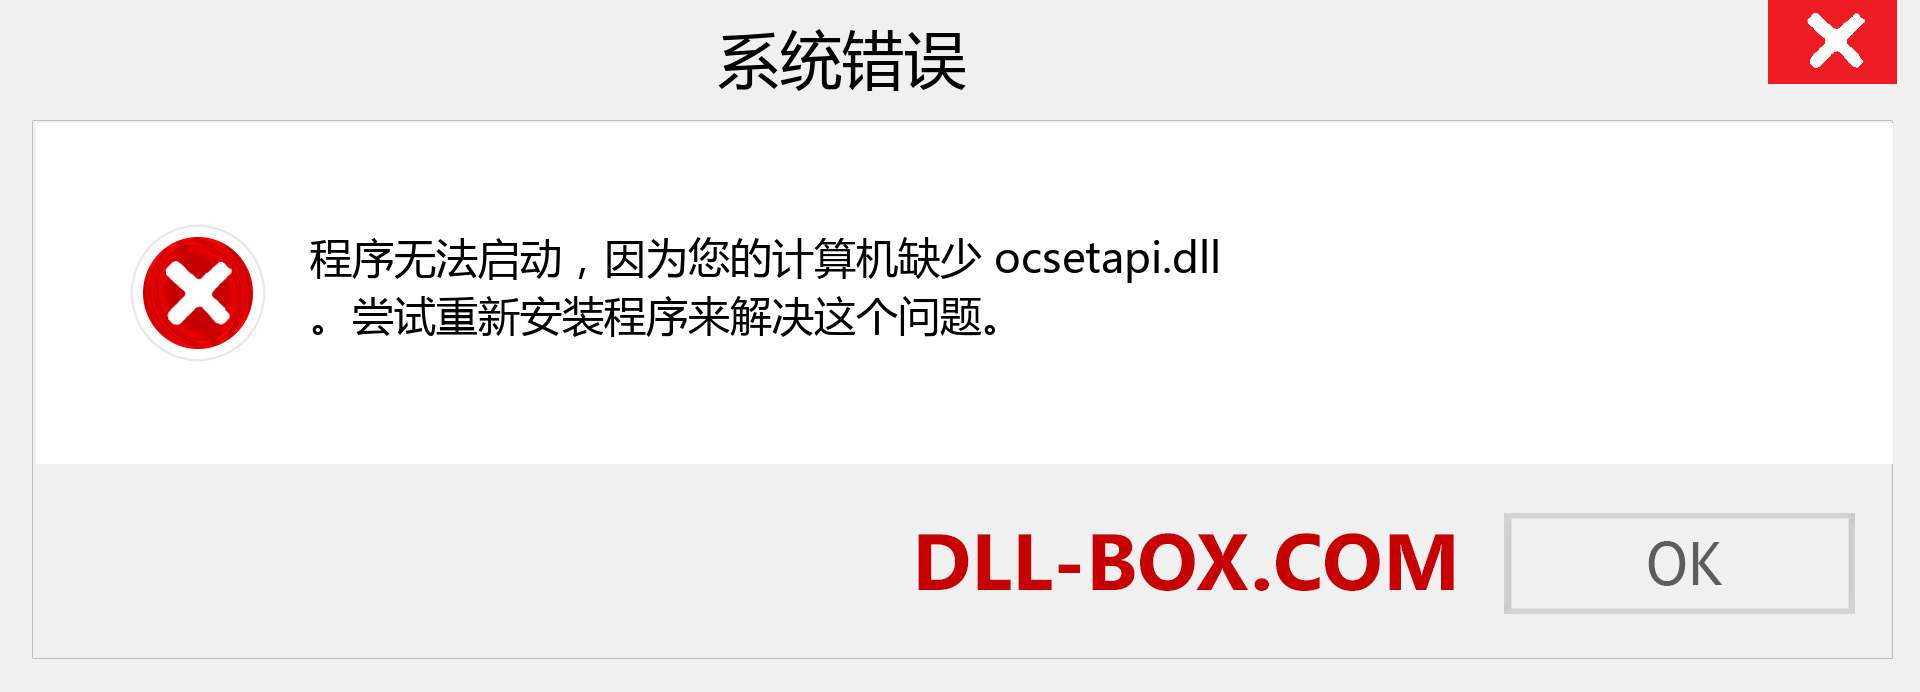 ocsetapi.dll 文件丢失？。 适用于 Windows 7、8、10 的下载 - 修复 Windows、照片、图像上的 ocsetapi dll 丢失错误